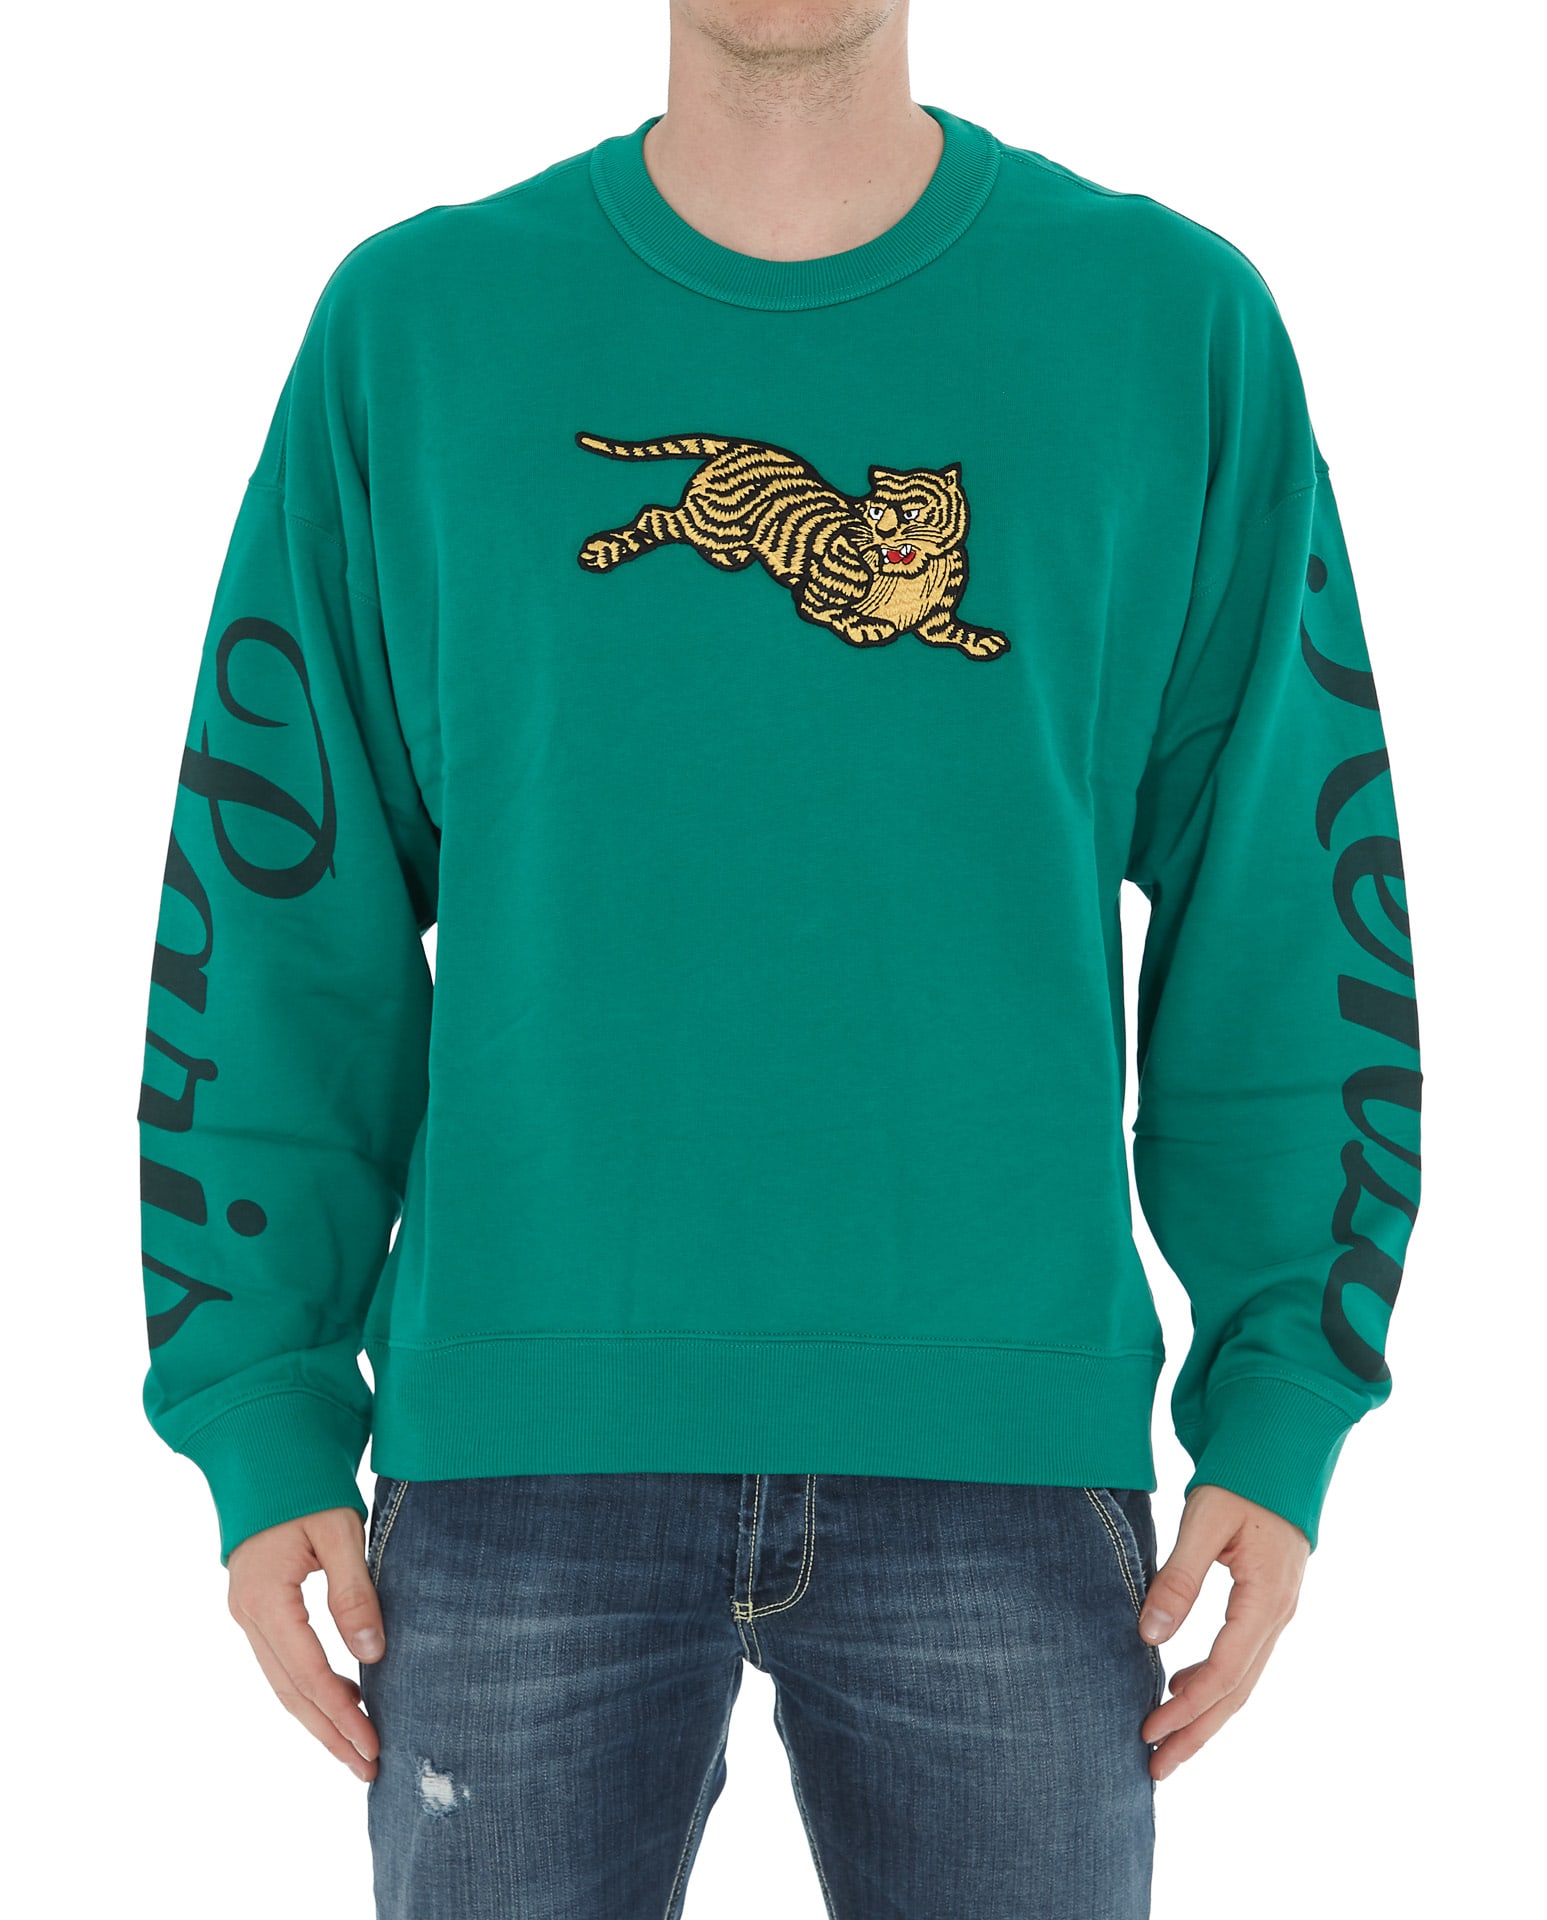 kenzo jumping tiger sweater